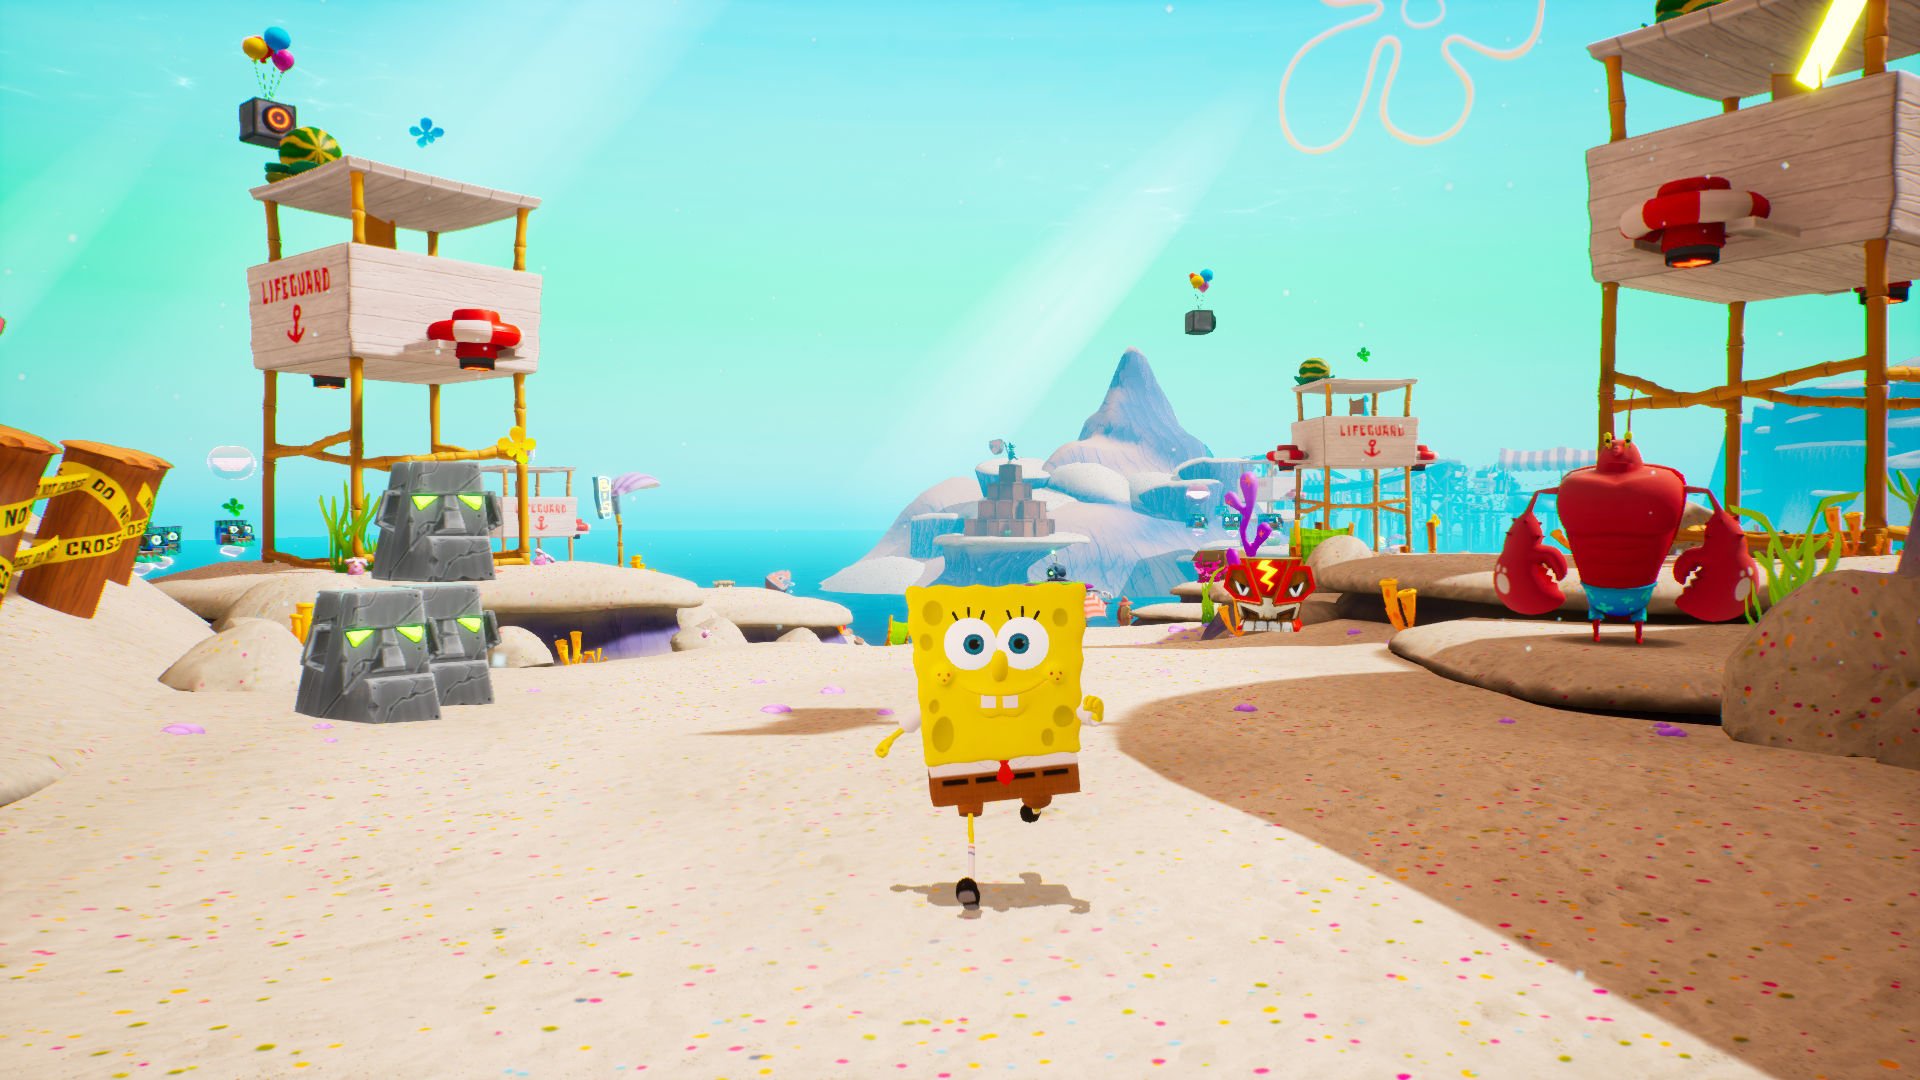 Screenshot for the game SpongeBob SquarePants: Battle for Bikini Bottom Rehydrated V. 1.03 [GOG] (2003-2020) download torrent License